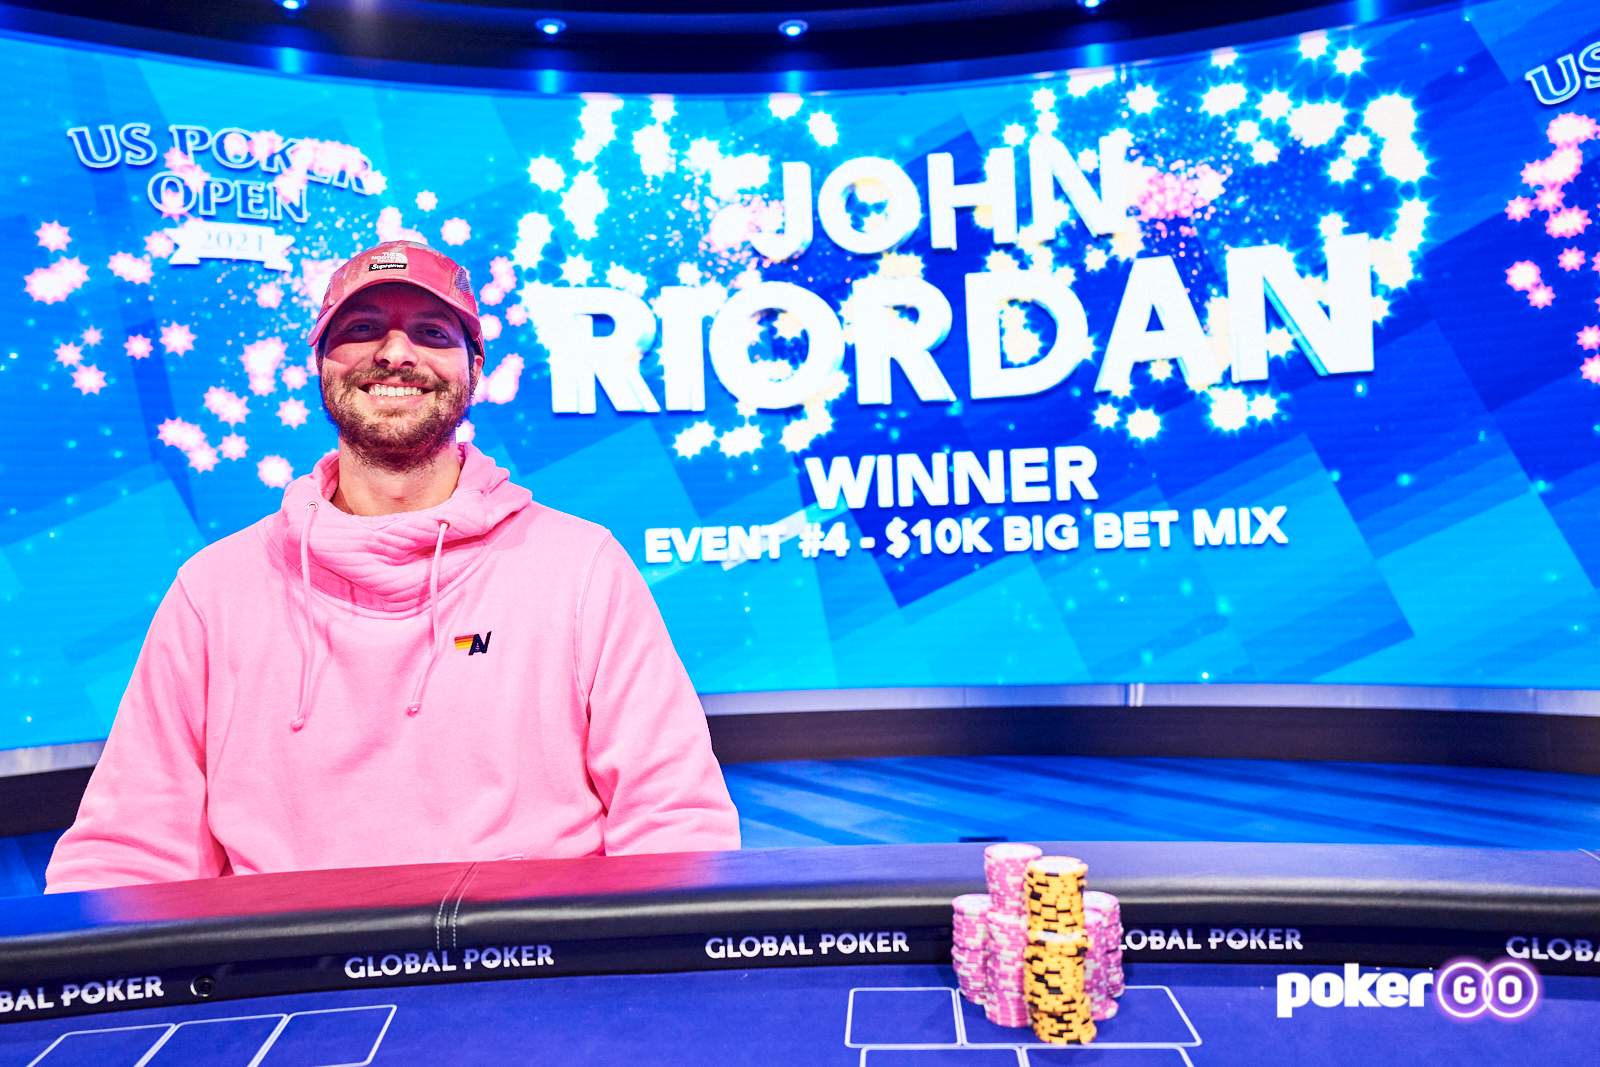 John Riordan Claims Big Bet Mix Title at 2021 U.S. Poker Open